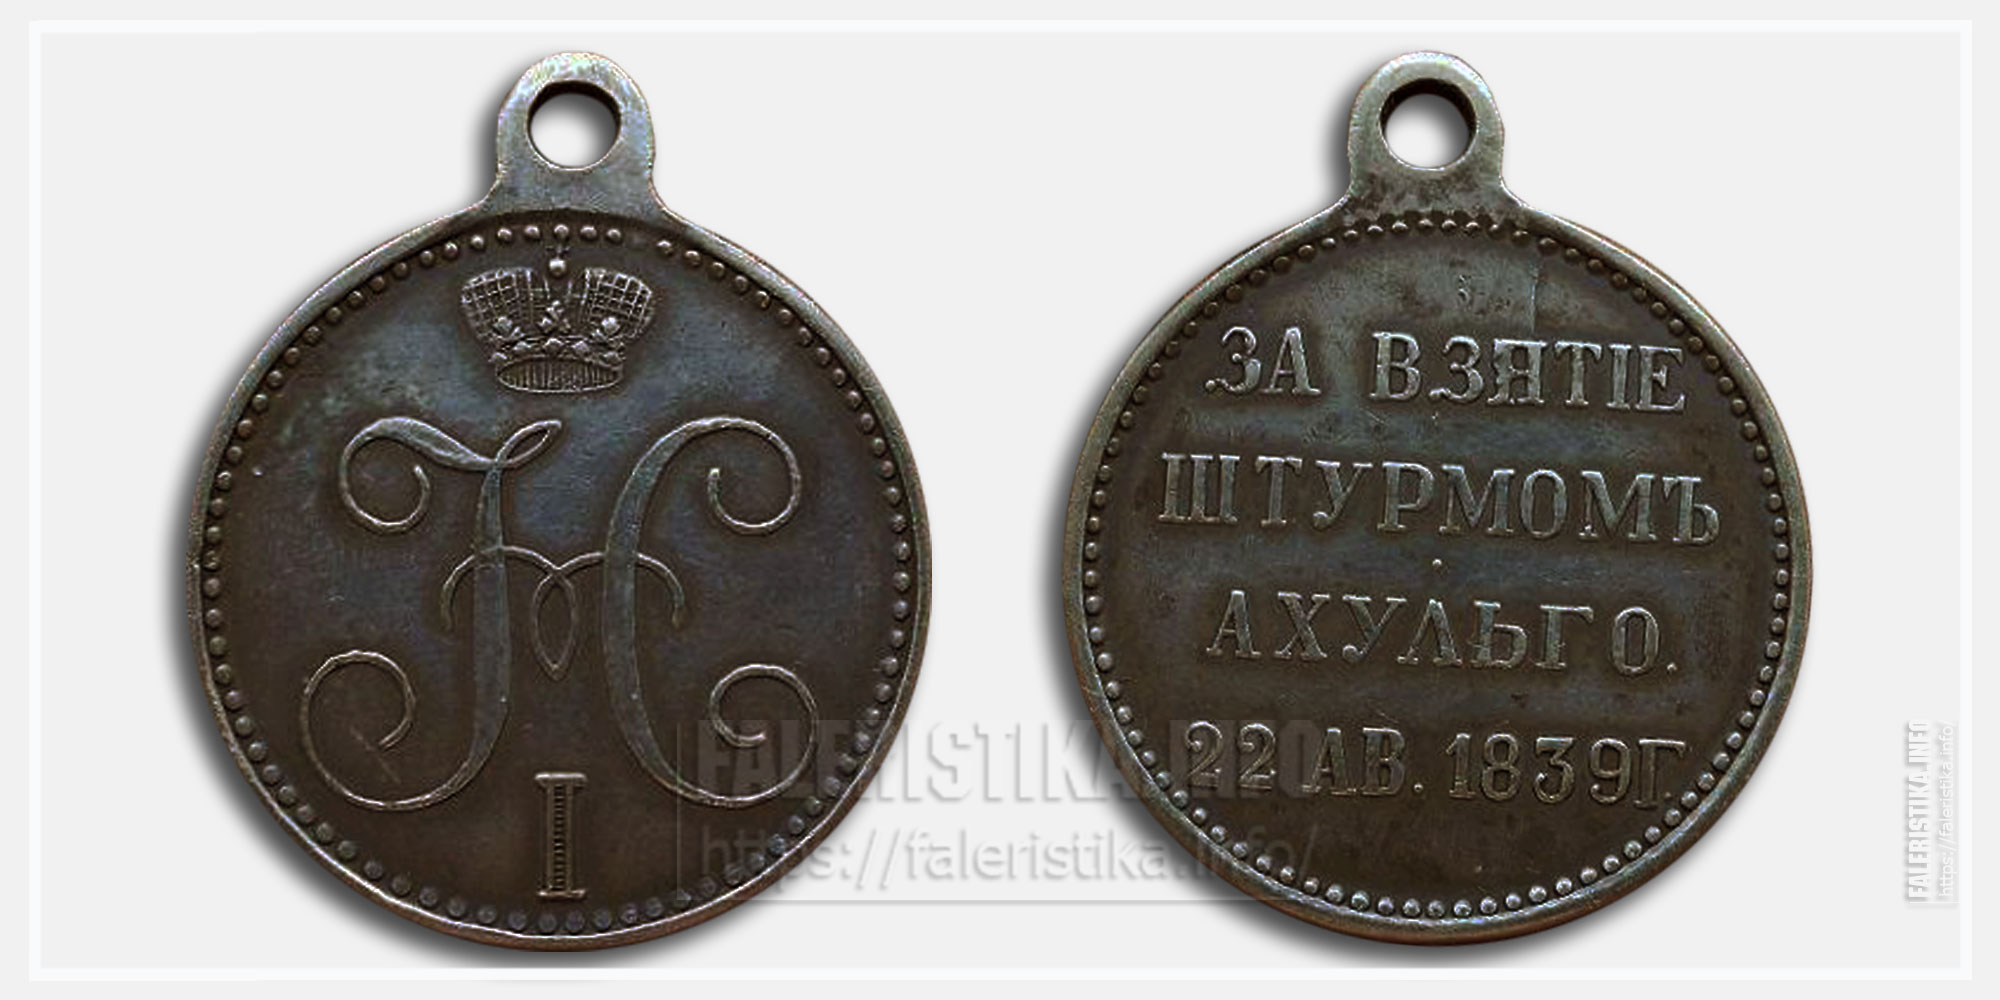 Медаль "За взятие штурмом Ахульго 1839"